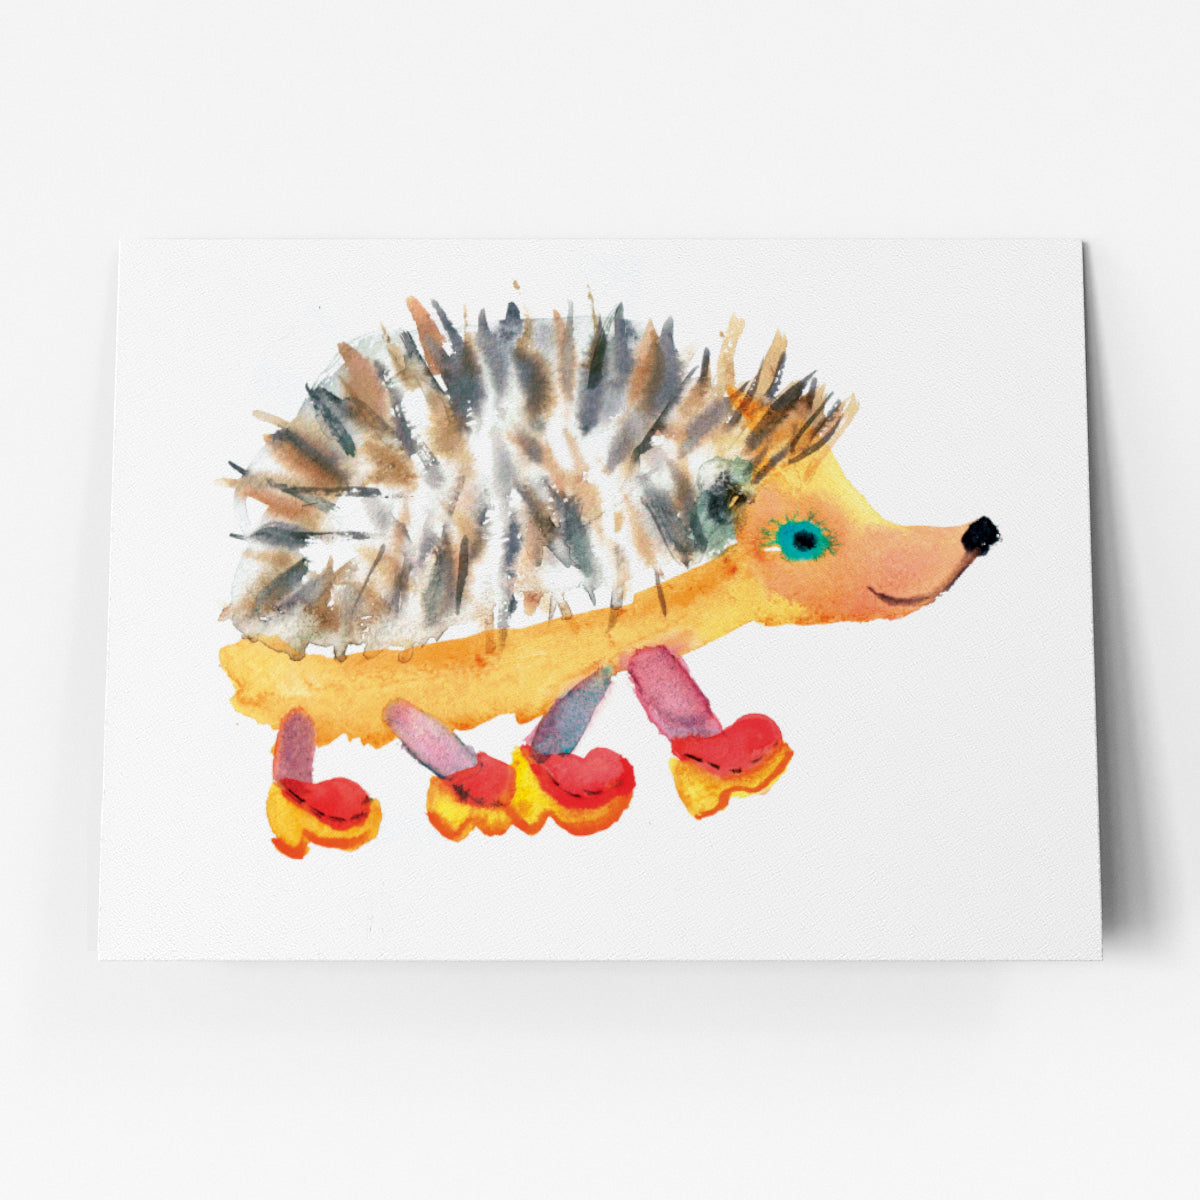 One Hedgehog in Clogs